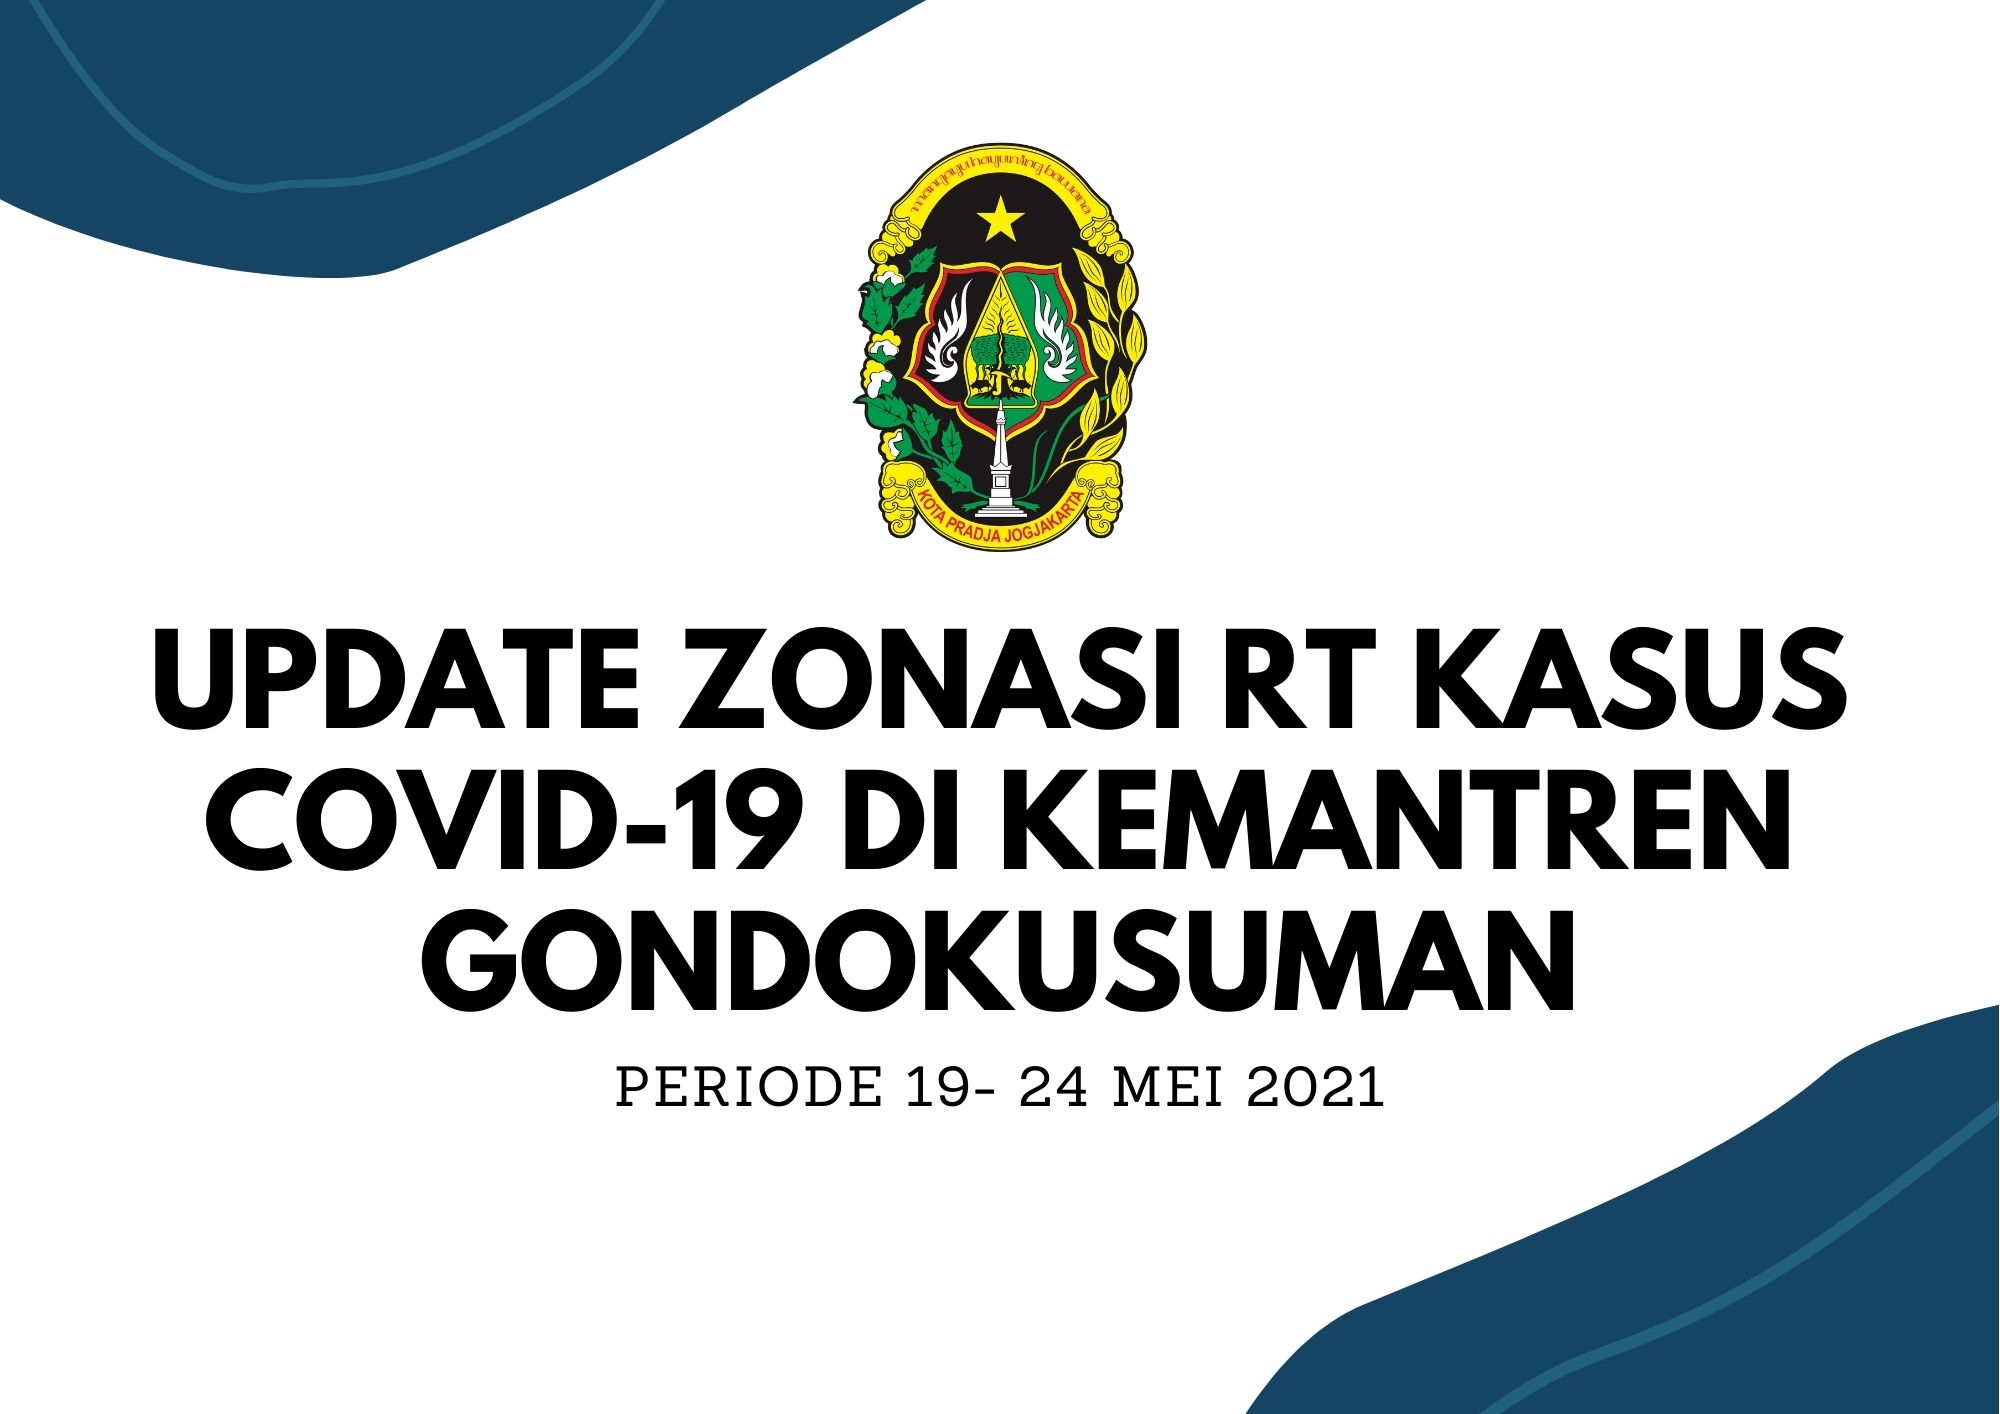 Update Zonasi RT Kasus Covid 19 periode 19 - 24 Mei 2021 Kemantren Gondokusuman